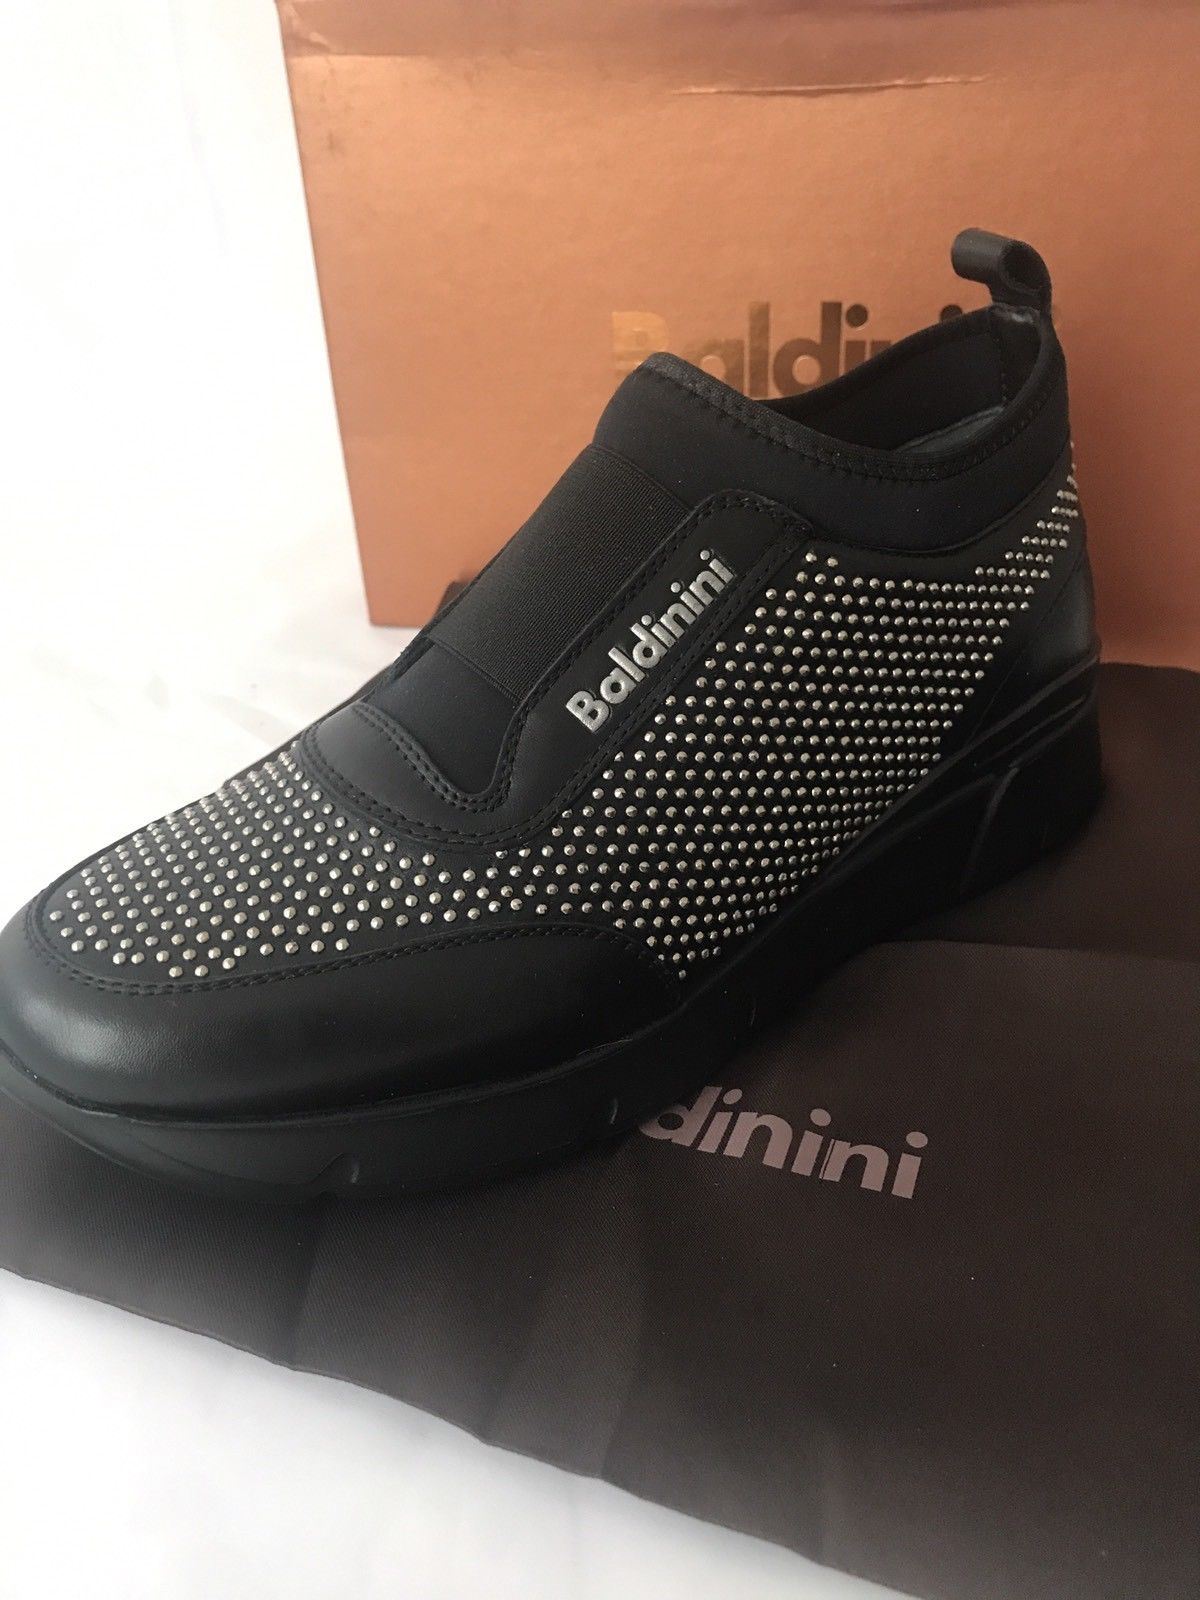 NIB $580 Baldinini Women’s  Studded Sneakers 748465  Black 37 Eu Made in Italy - BAYSUPERSTORE